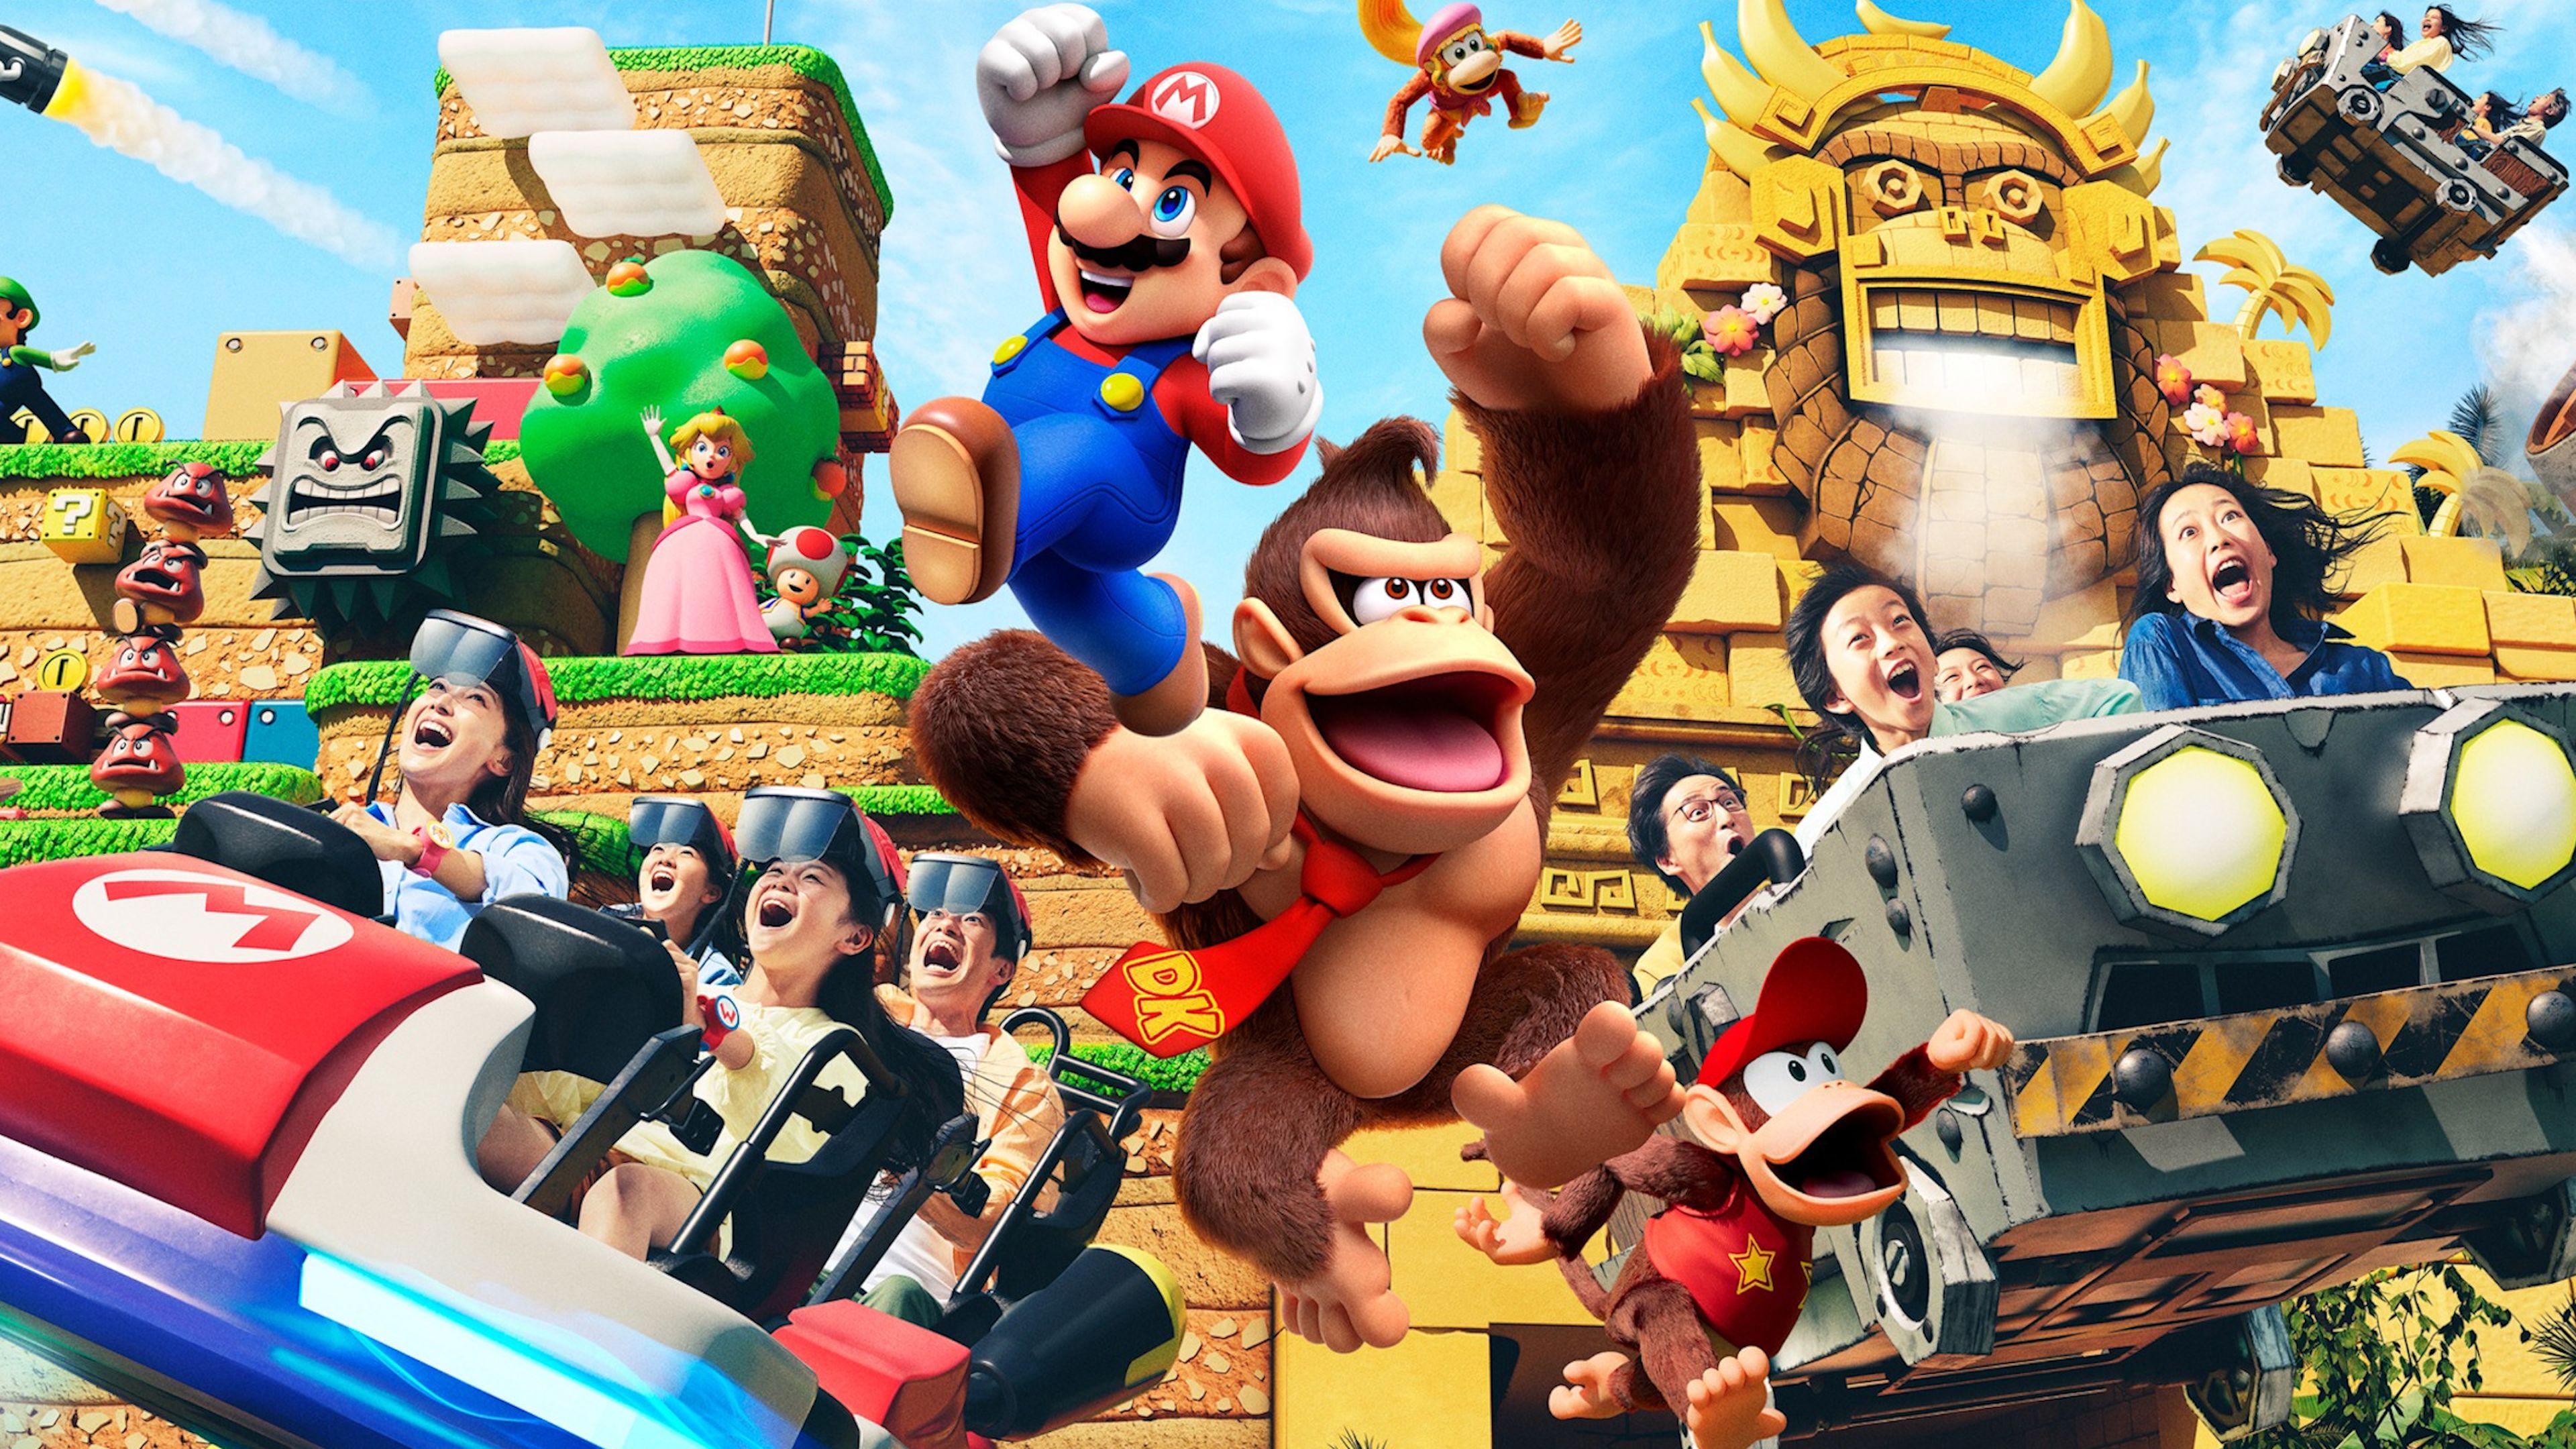 Universal Studios Japan Donkey Kong Super Nintendo World